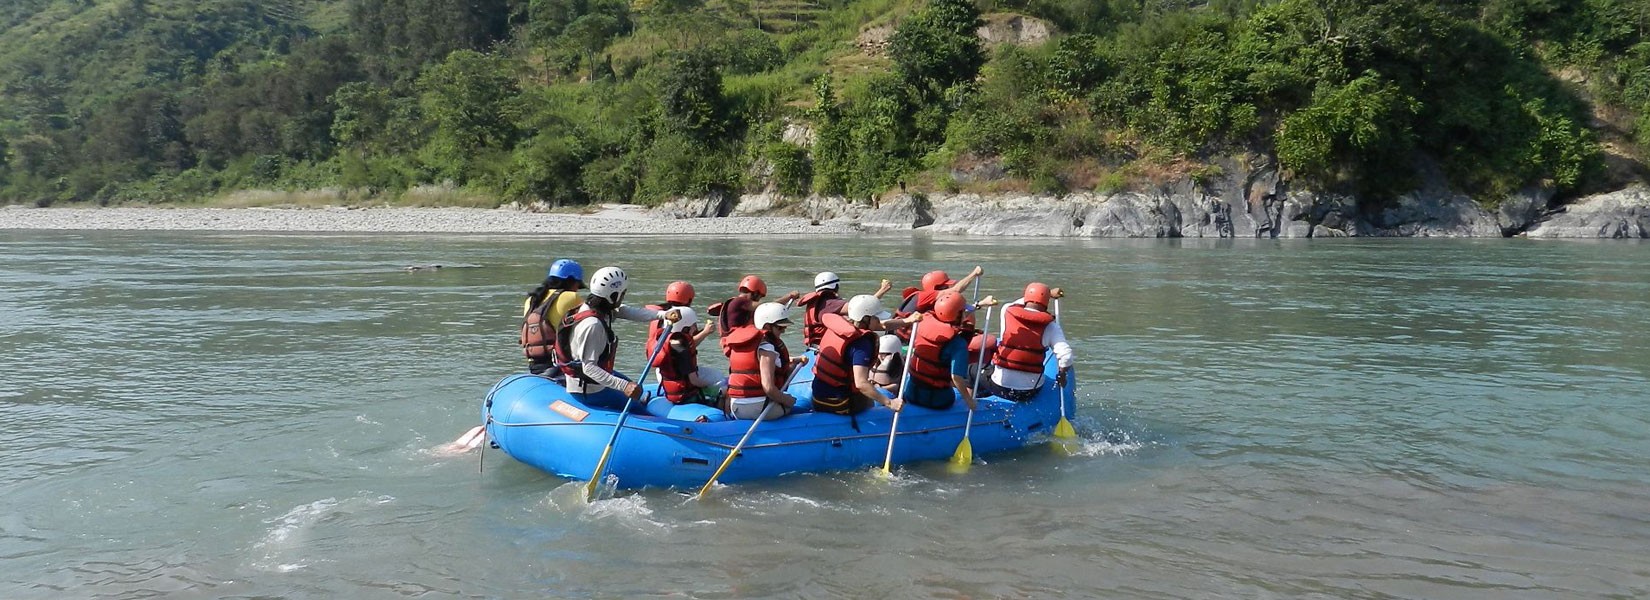 Rafting in Trishuli River